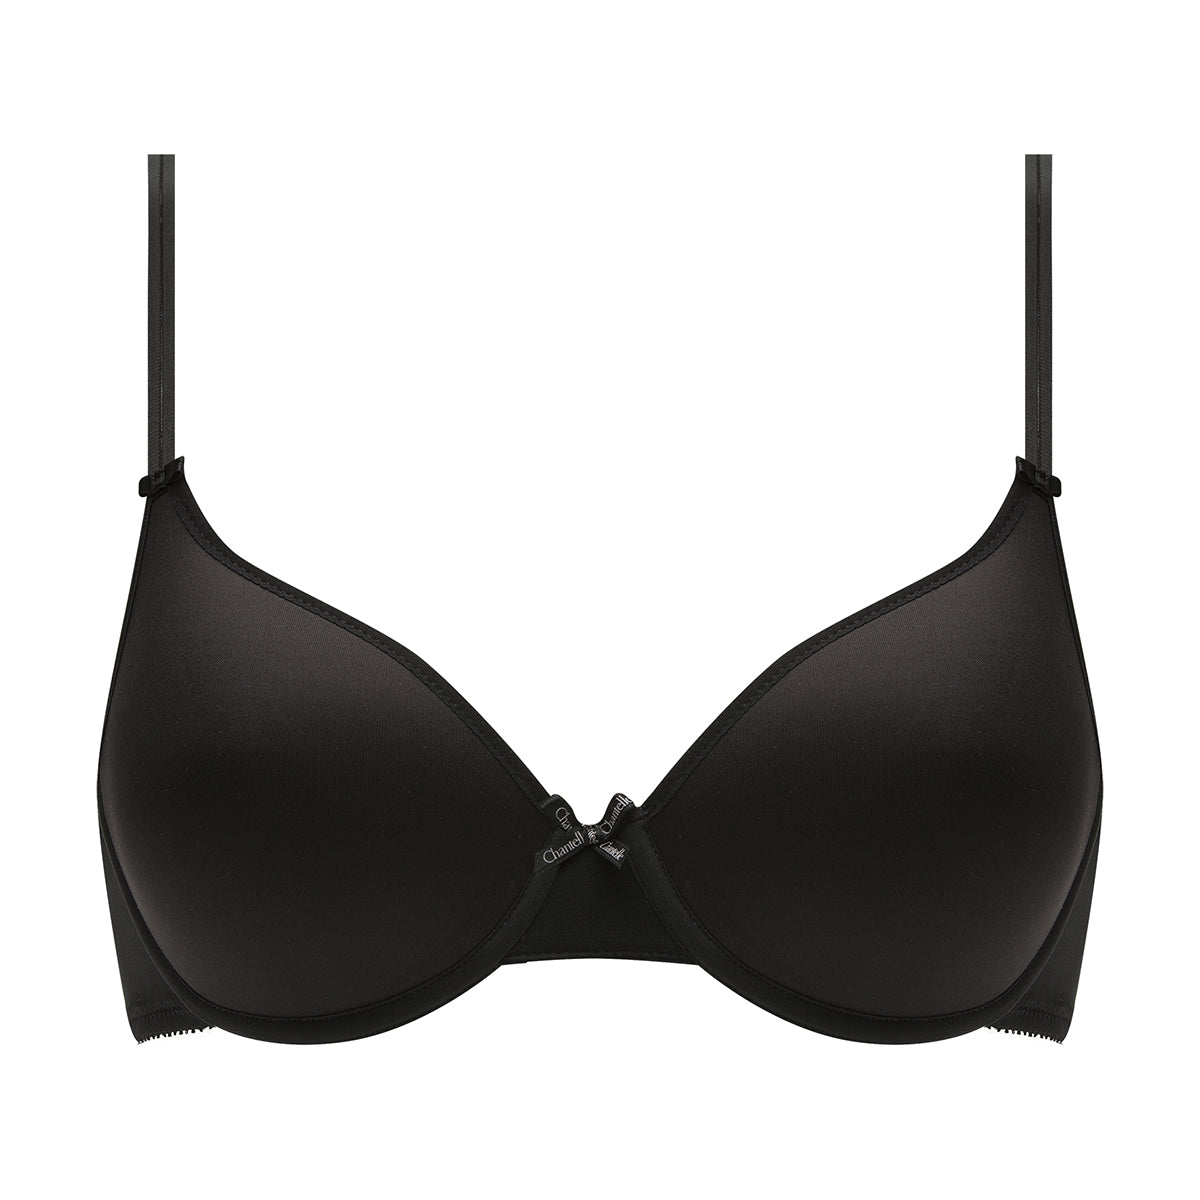 Chantelle Lingerie Full Coverage Underwire Bra Women Size 38 DDD US Black  9449 for sale online